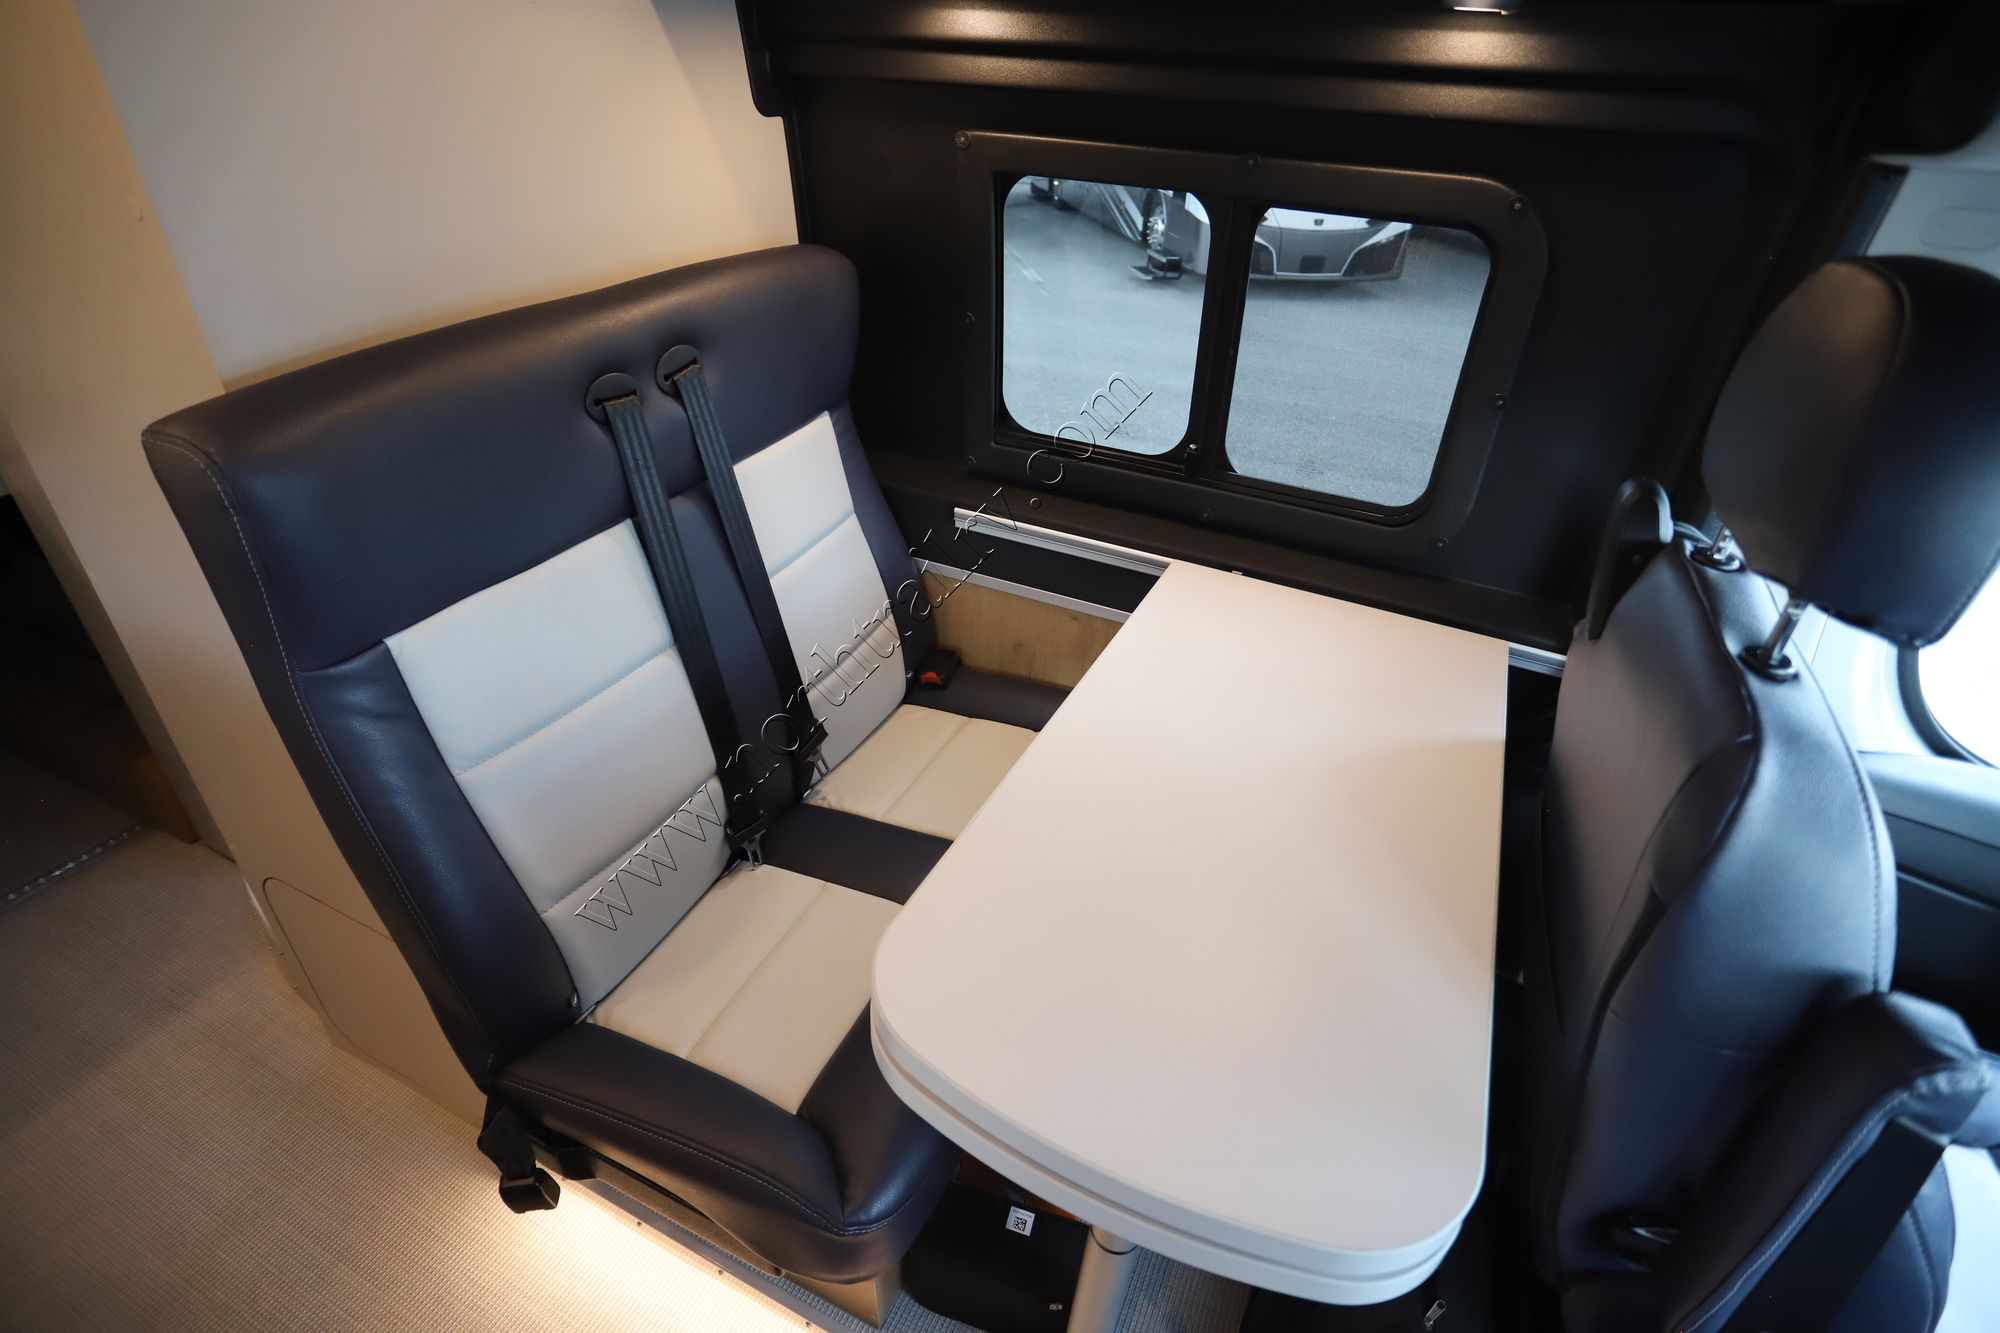 New 2023 Airstream Rangeline RLN 23 Class B  For Sale